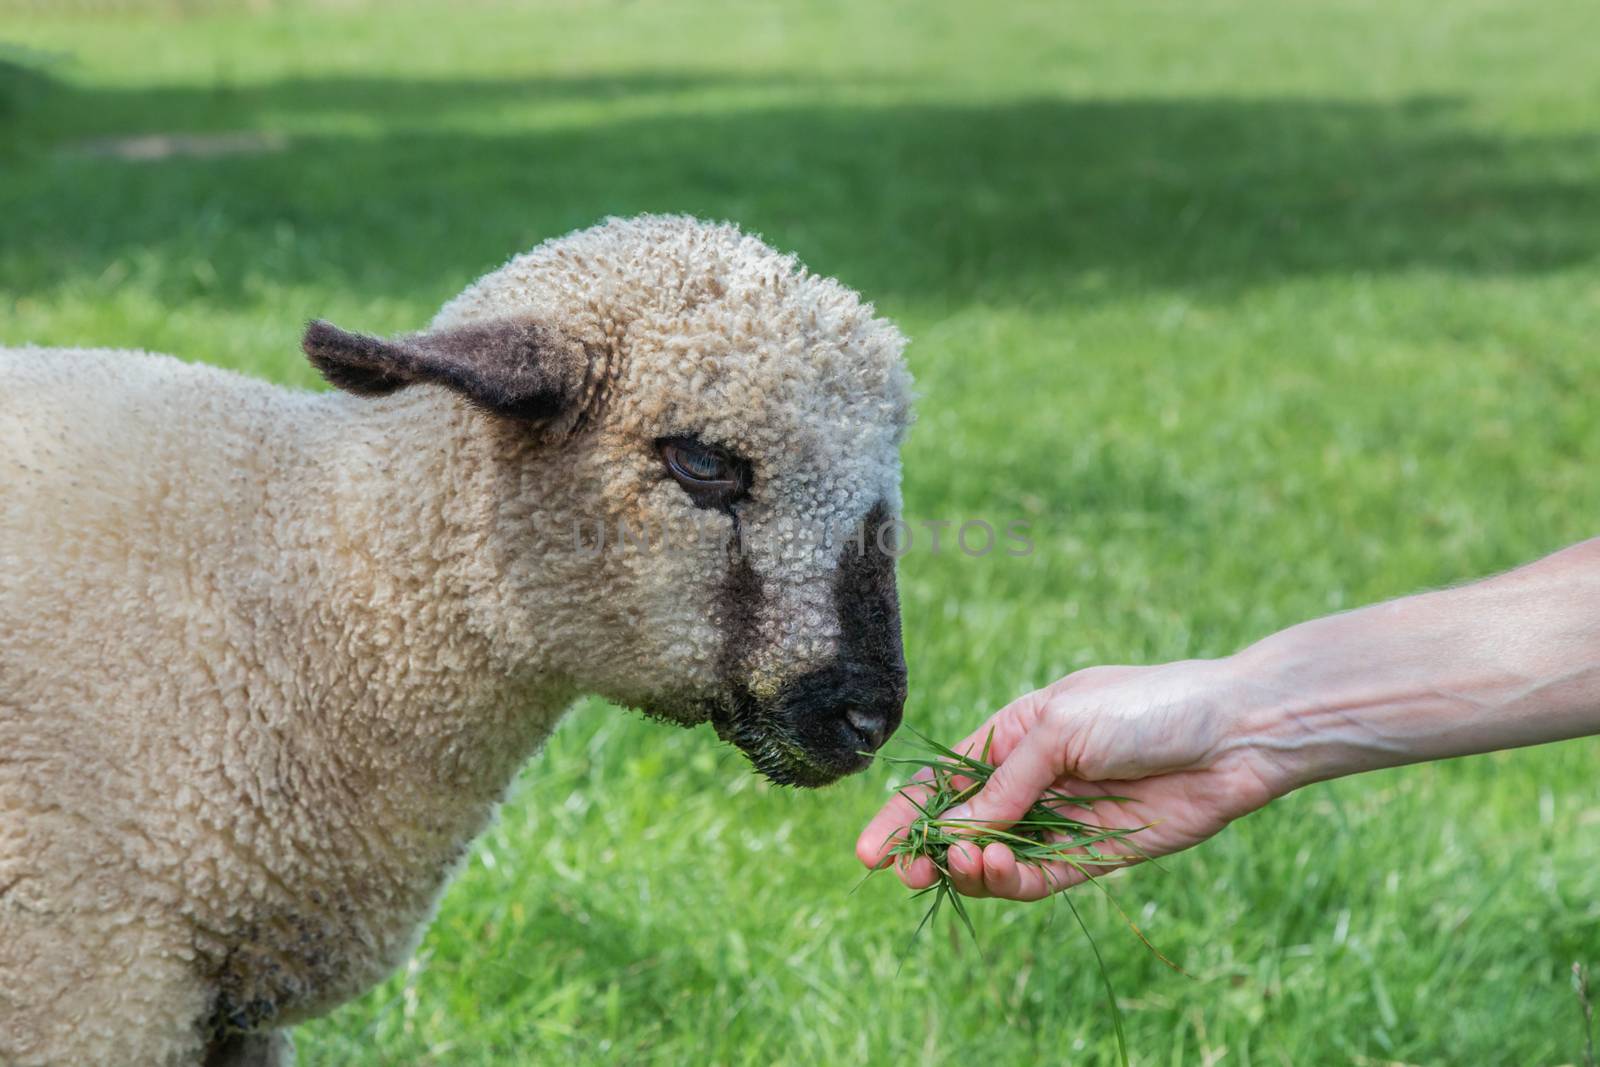 Hand feeding grass to lamb by BenSchonewille